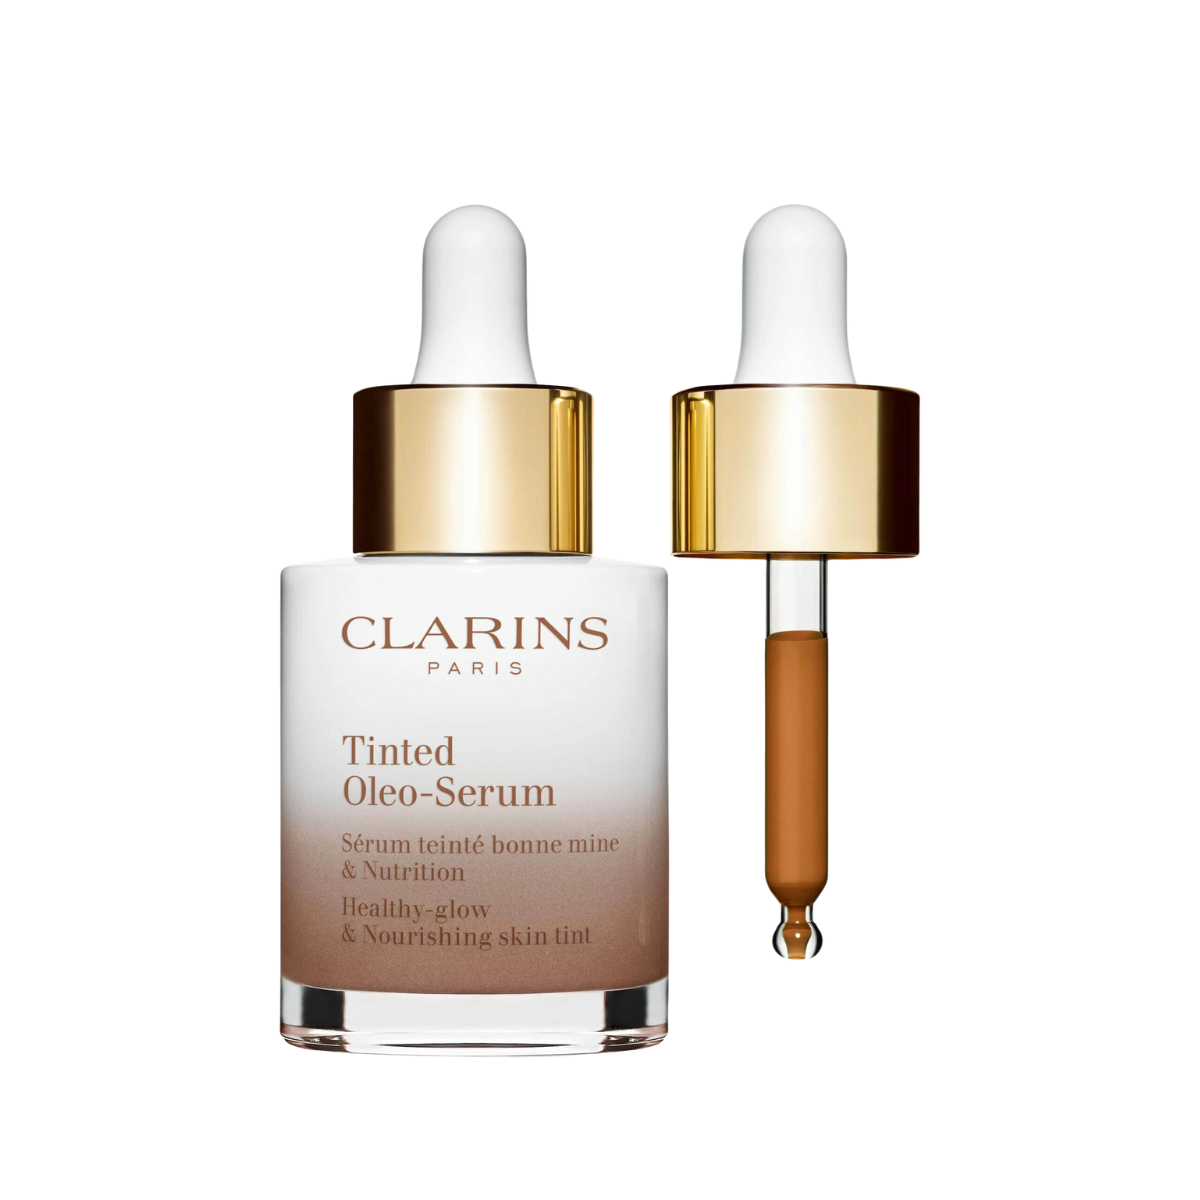 Clarins Tinted Oleo Serum Foundation